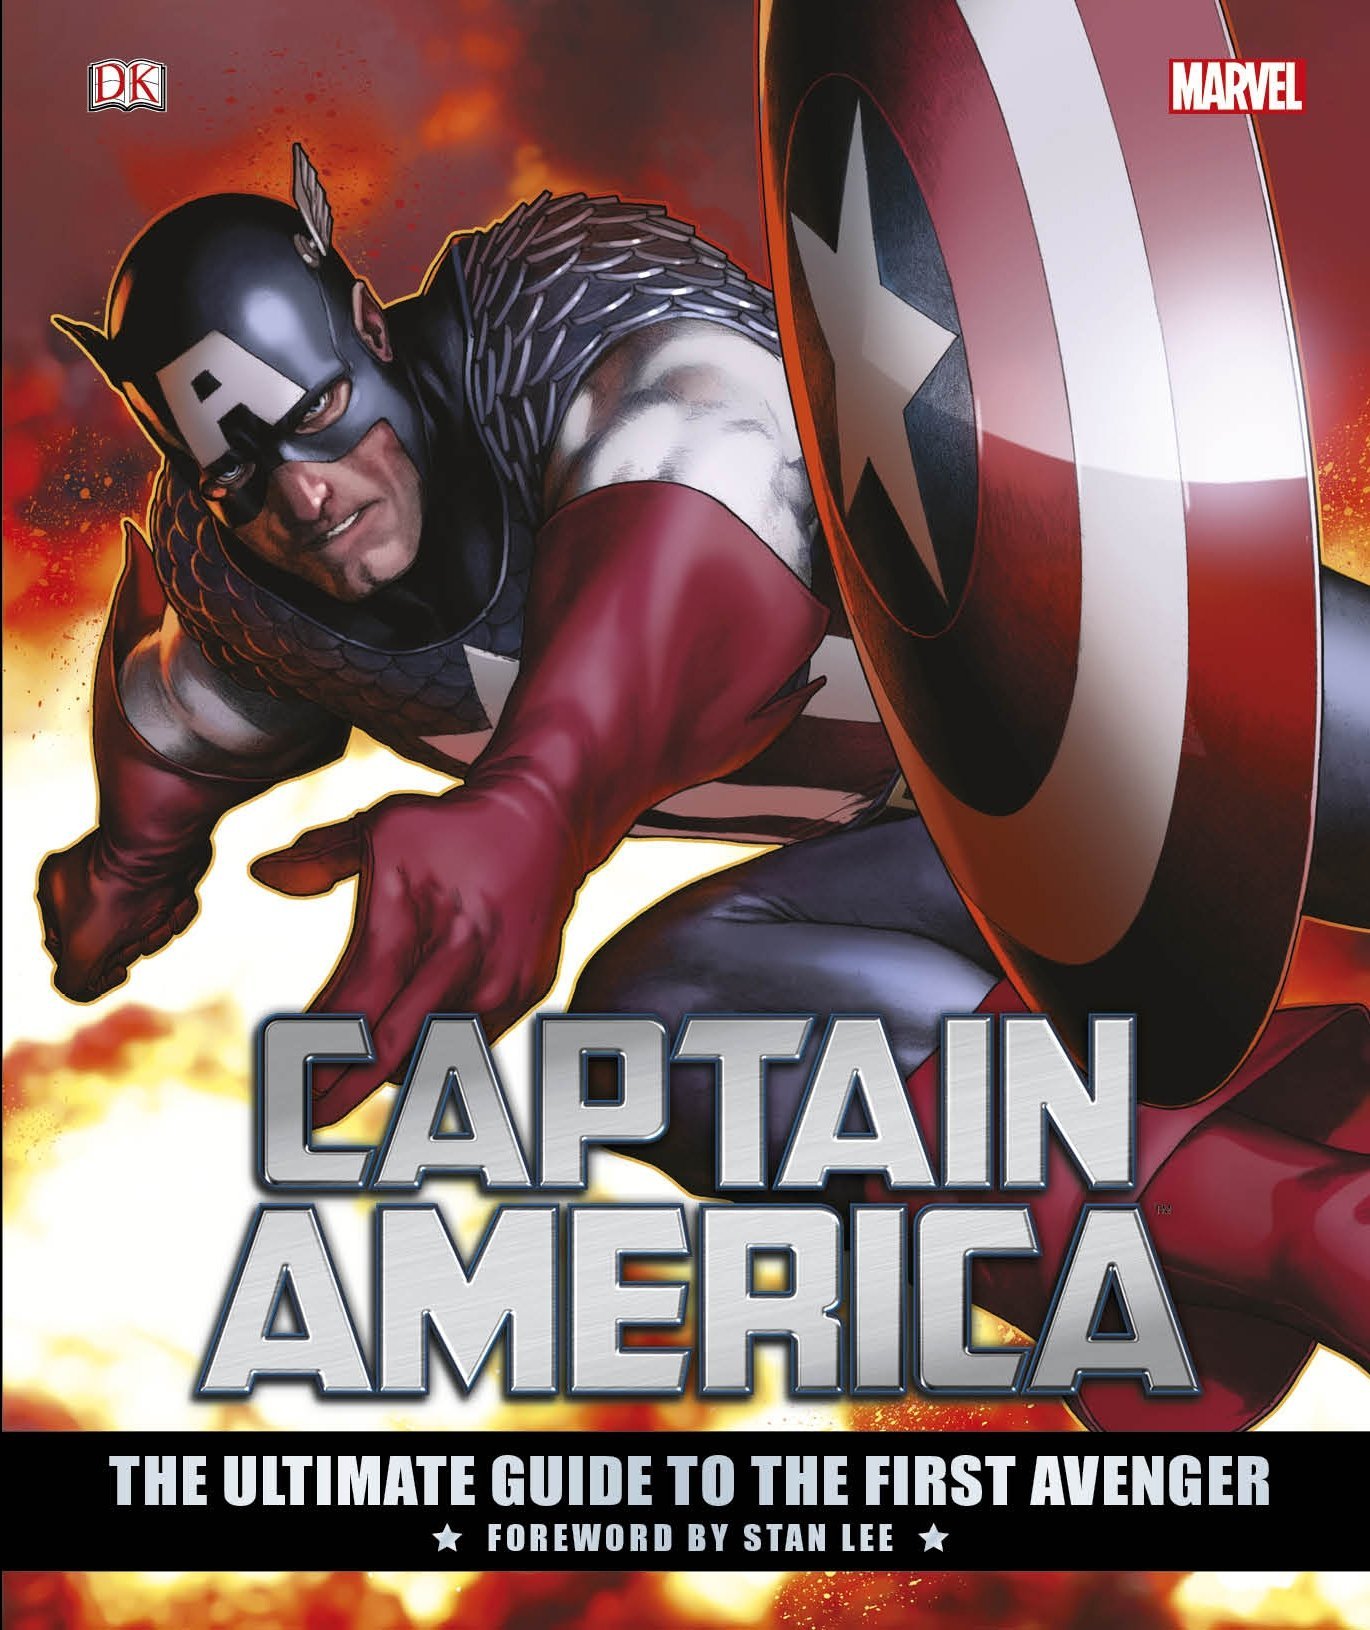 Captain America | Matt Forbeck, Alan Cowsill, Daniel Wallace